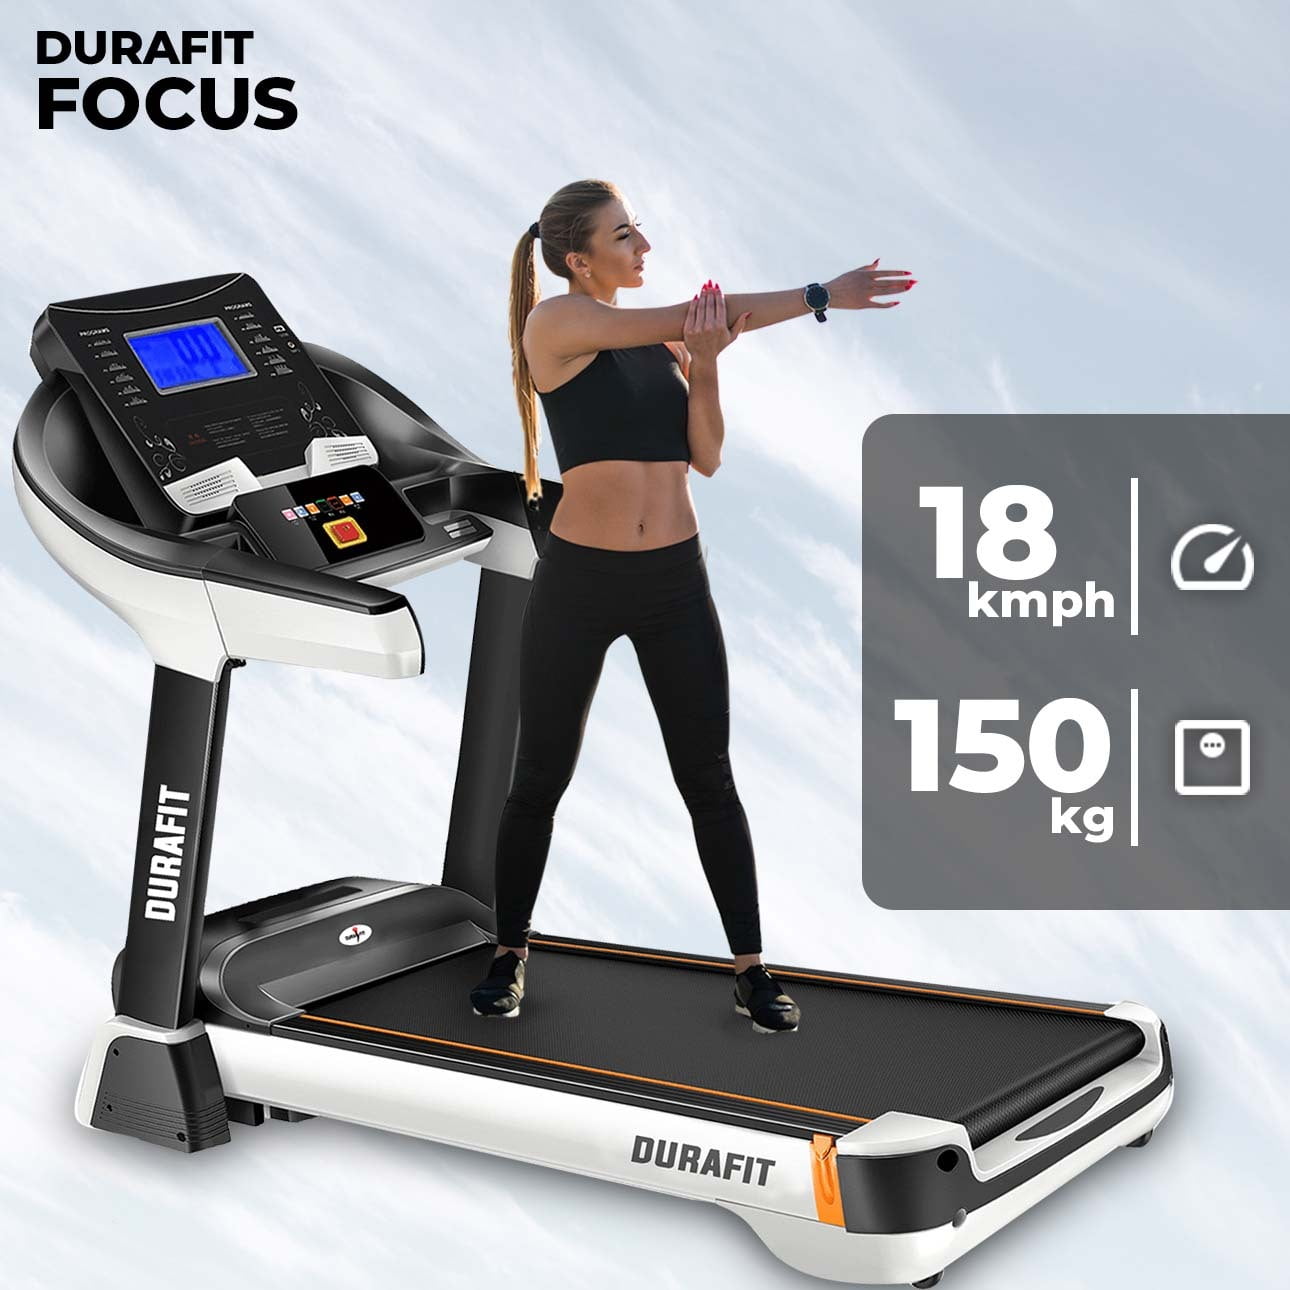 Durafit Focus Treadmill with 150kg